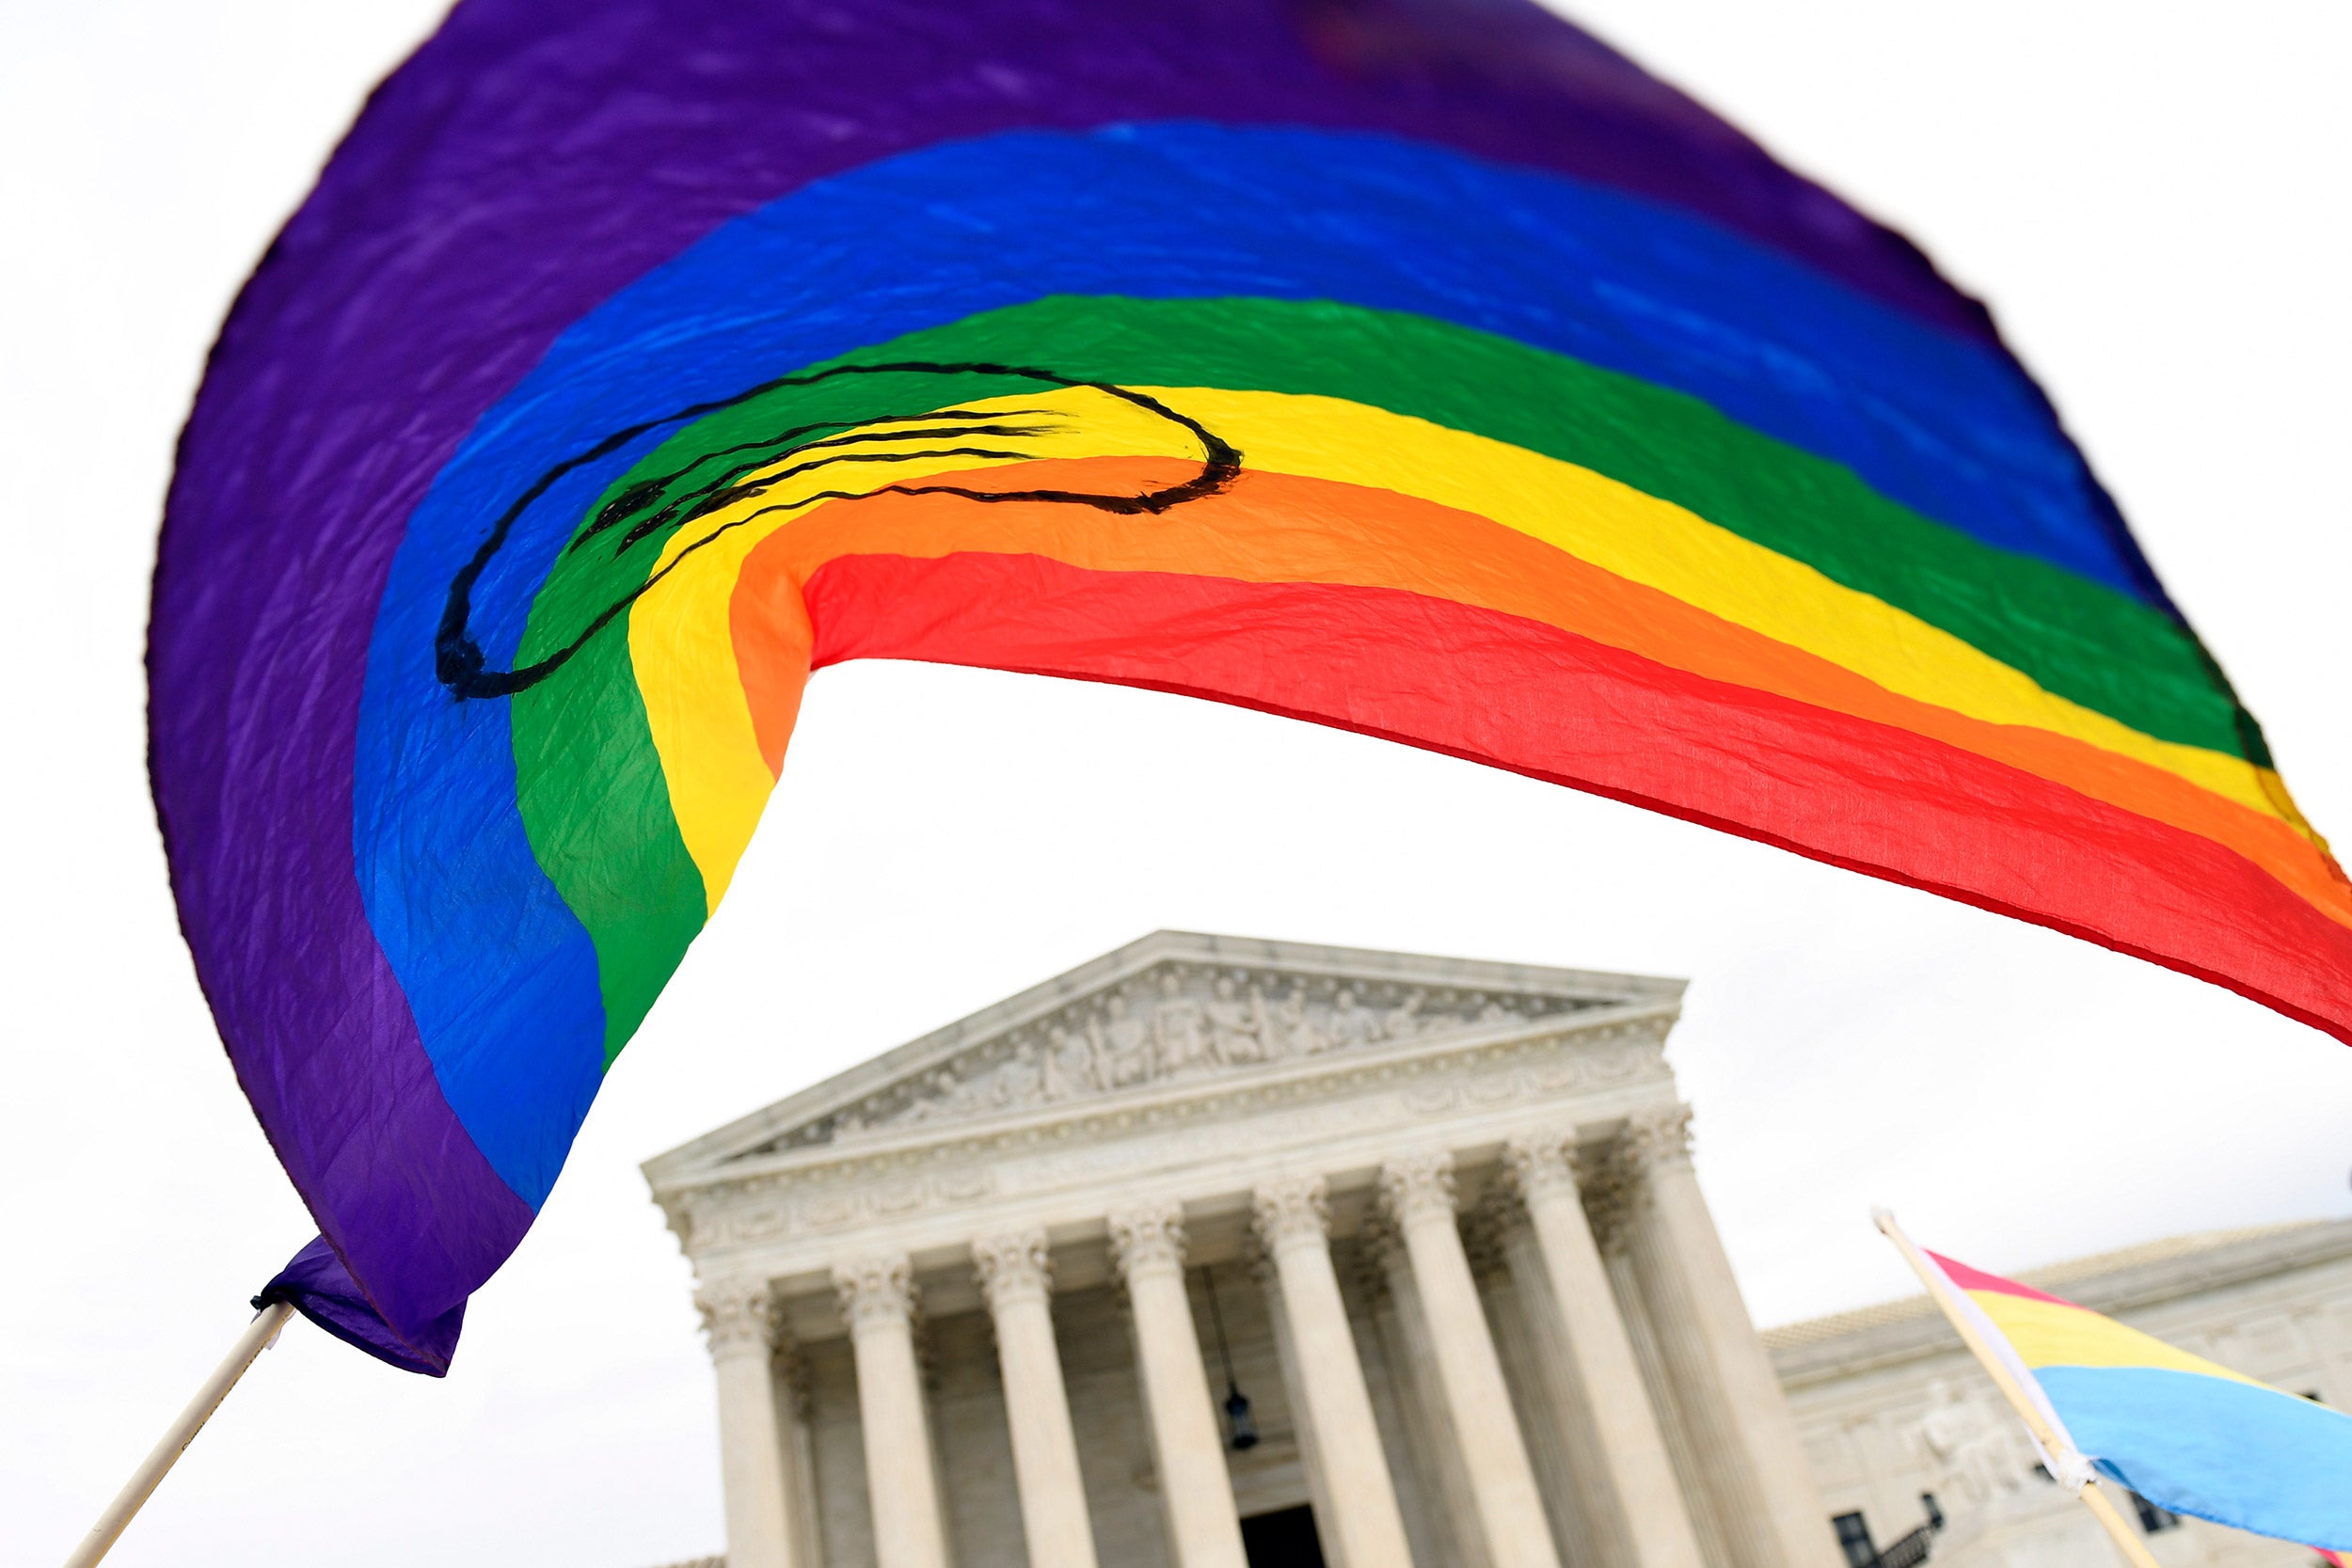 Harvard experts call ruling on LGBT rights a landmark